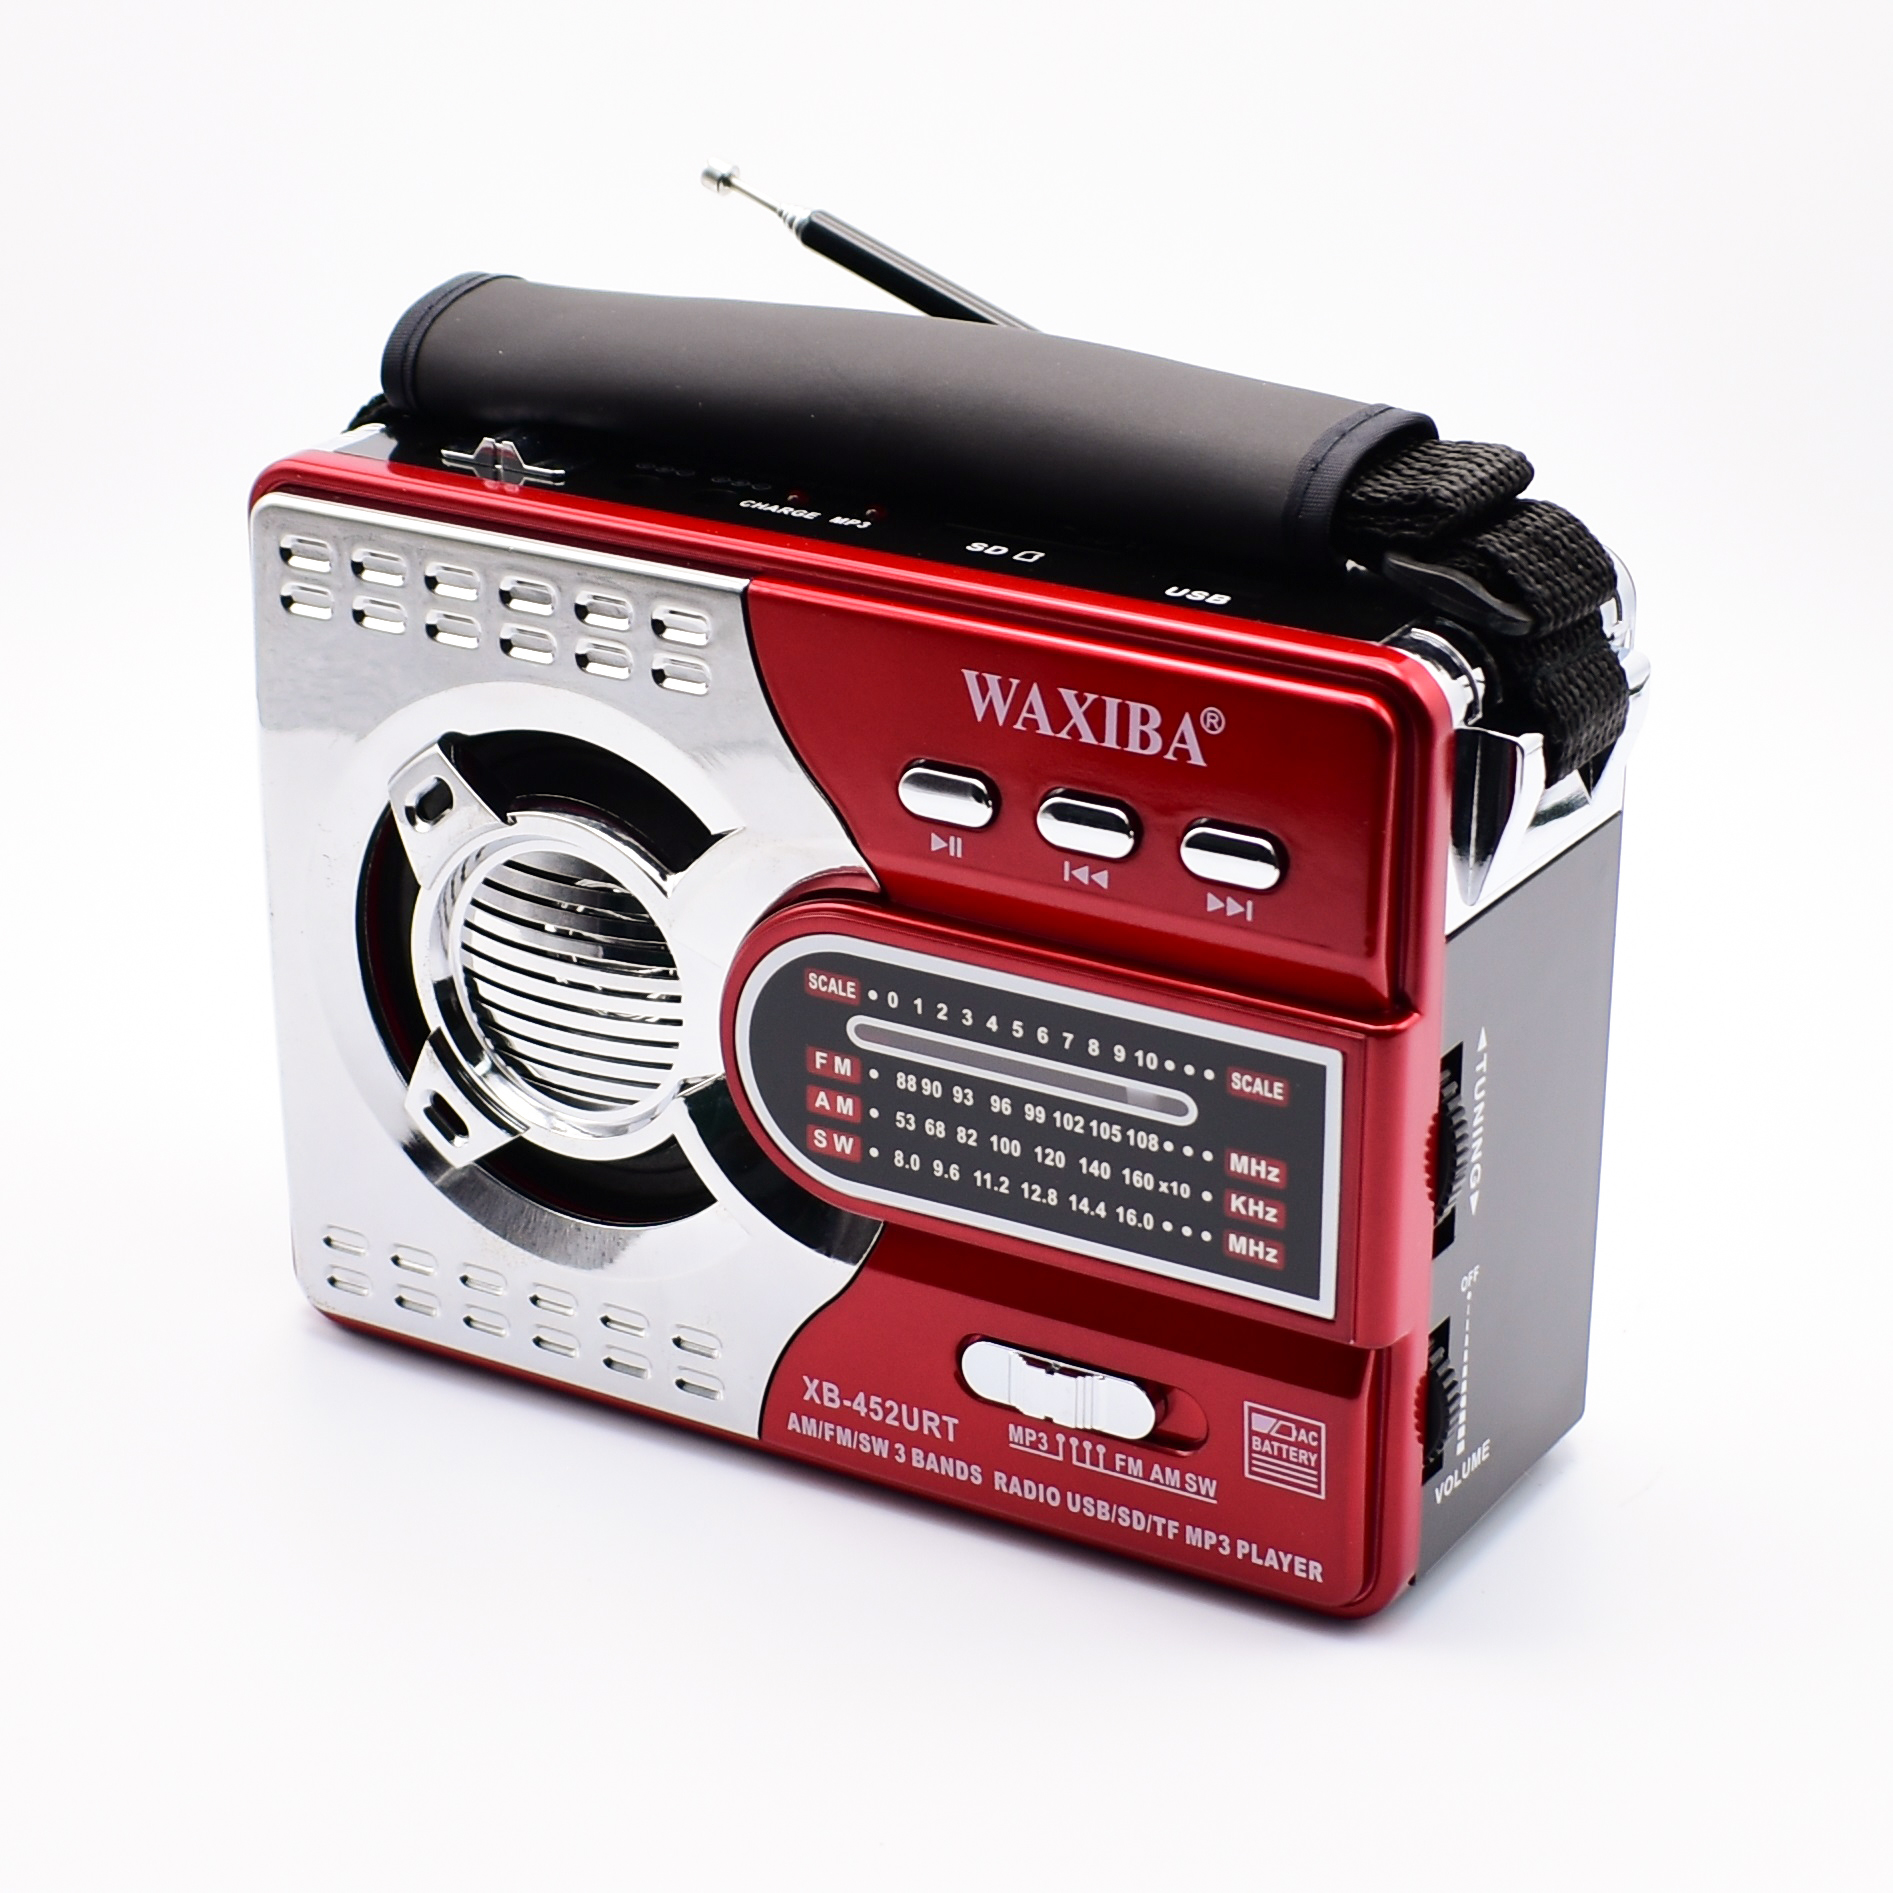 راديو WAXIBA .XB.452URT